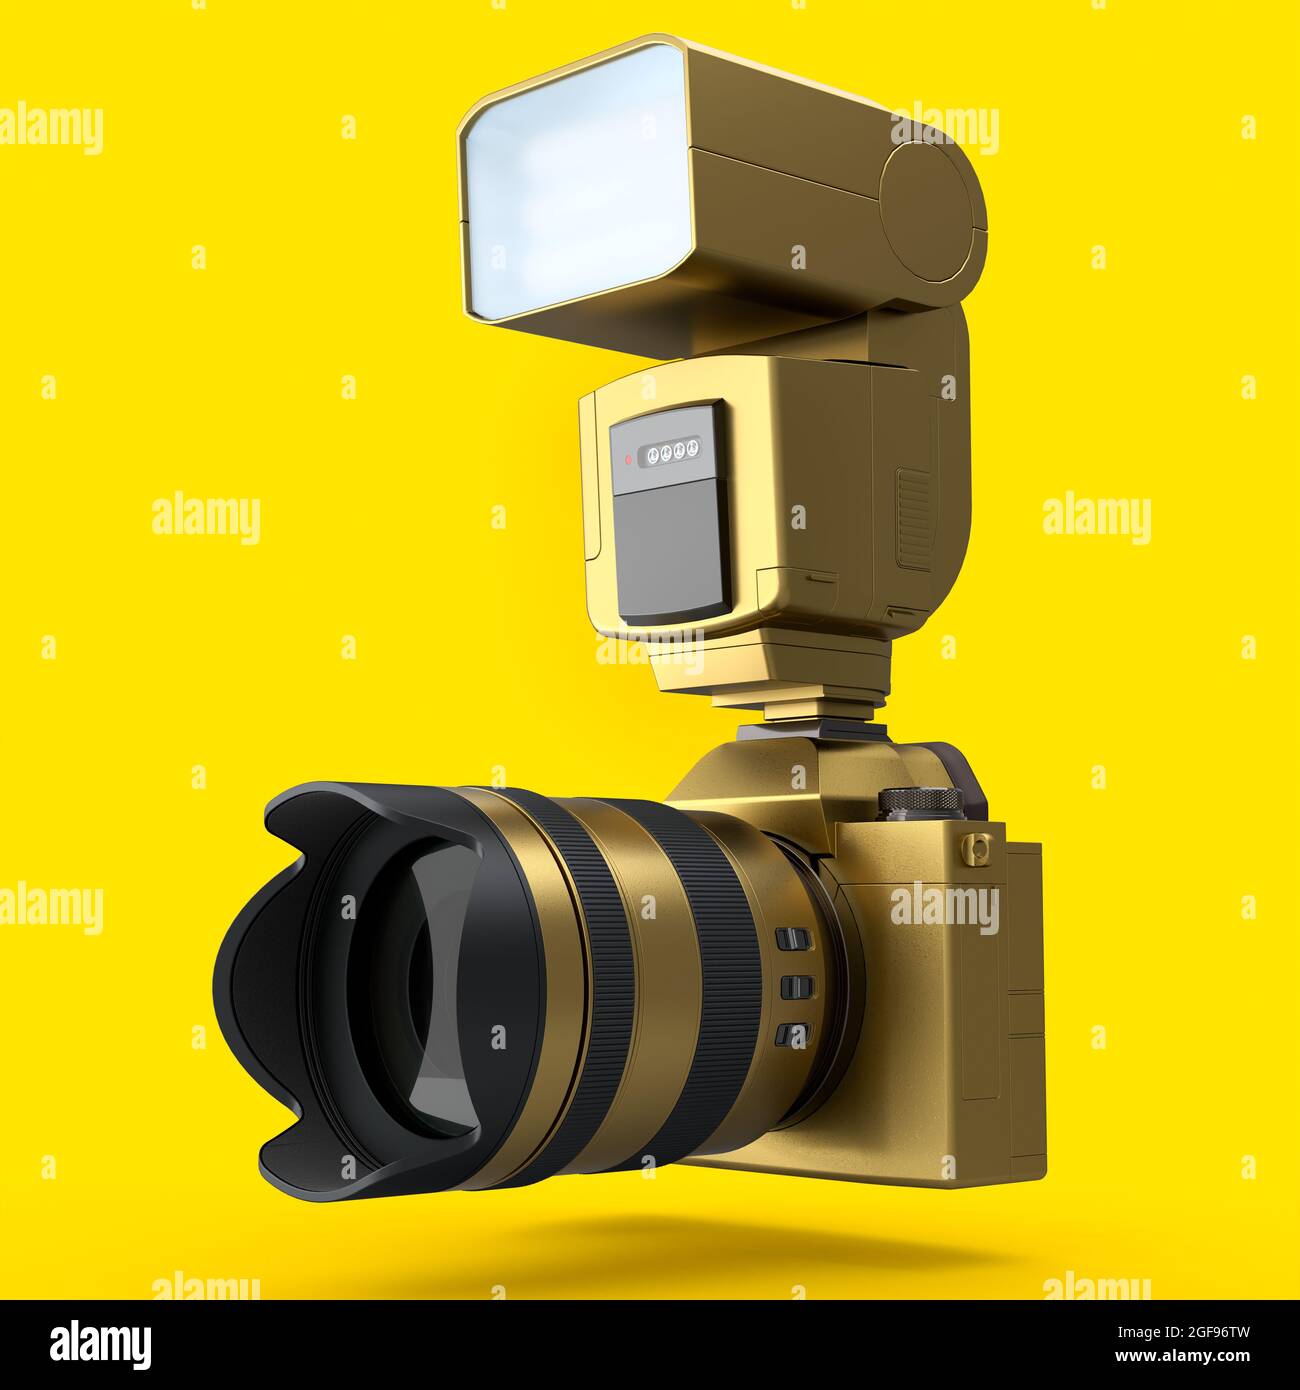 Concepto de cámara DSLR inexistente en oro con lente y flash externo speedlight aislado sobre fondo amarillo. 3D Representación de fotografía profesional Foto de stock